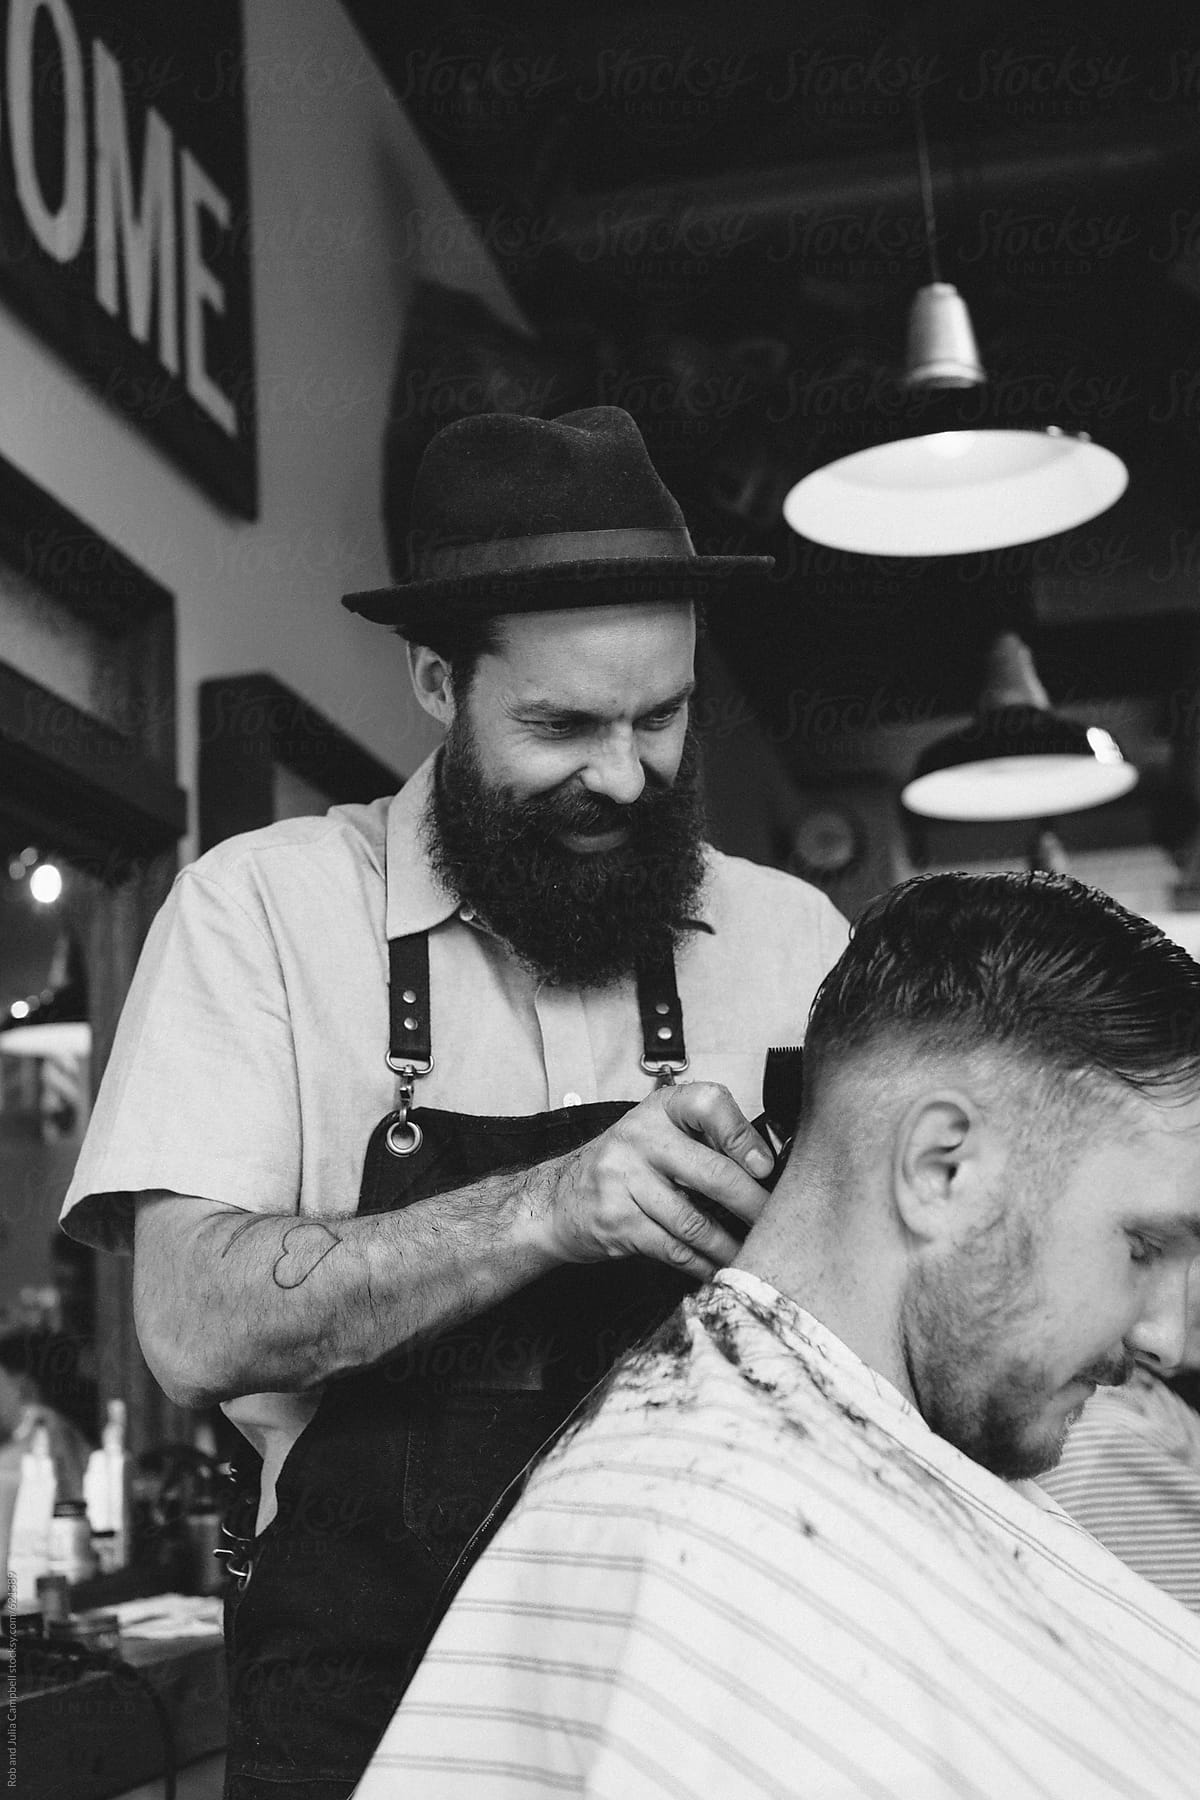 Stylish modern barber enjoying giving man a classic haircut